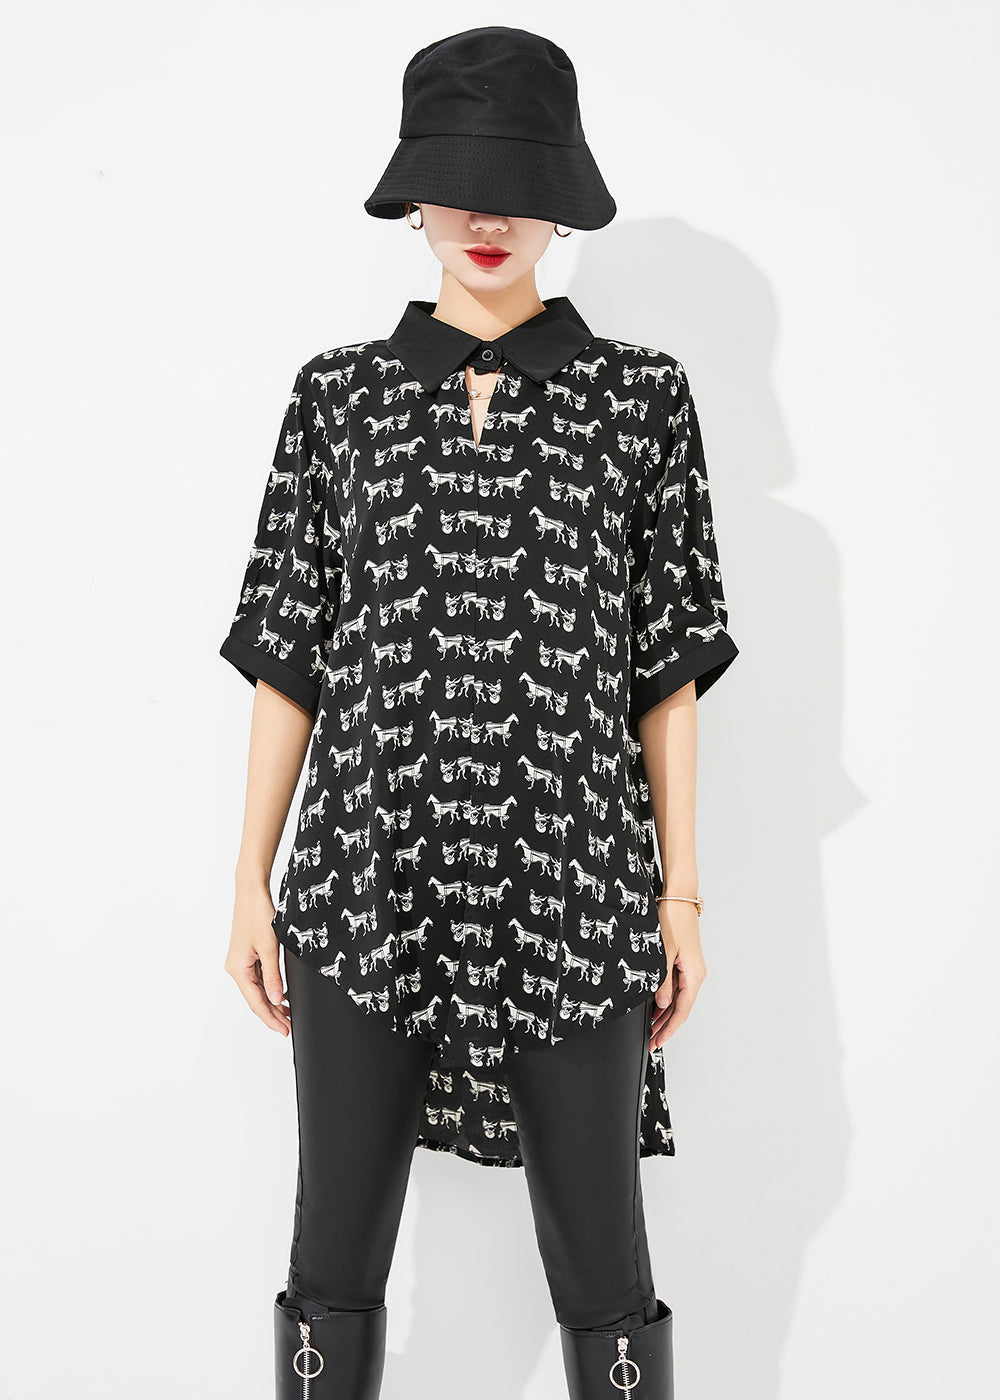 Classy Black Oversized Print Low High Design Chiffon Long Shirt Half Sleeve LY0824 - fabuloryshop